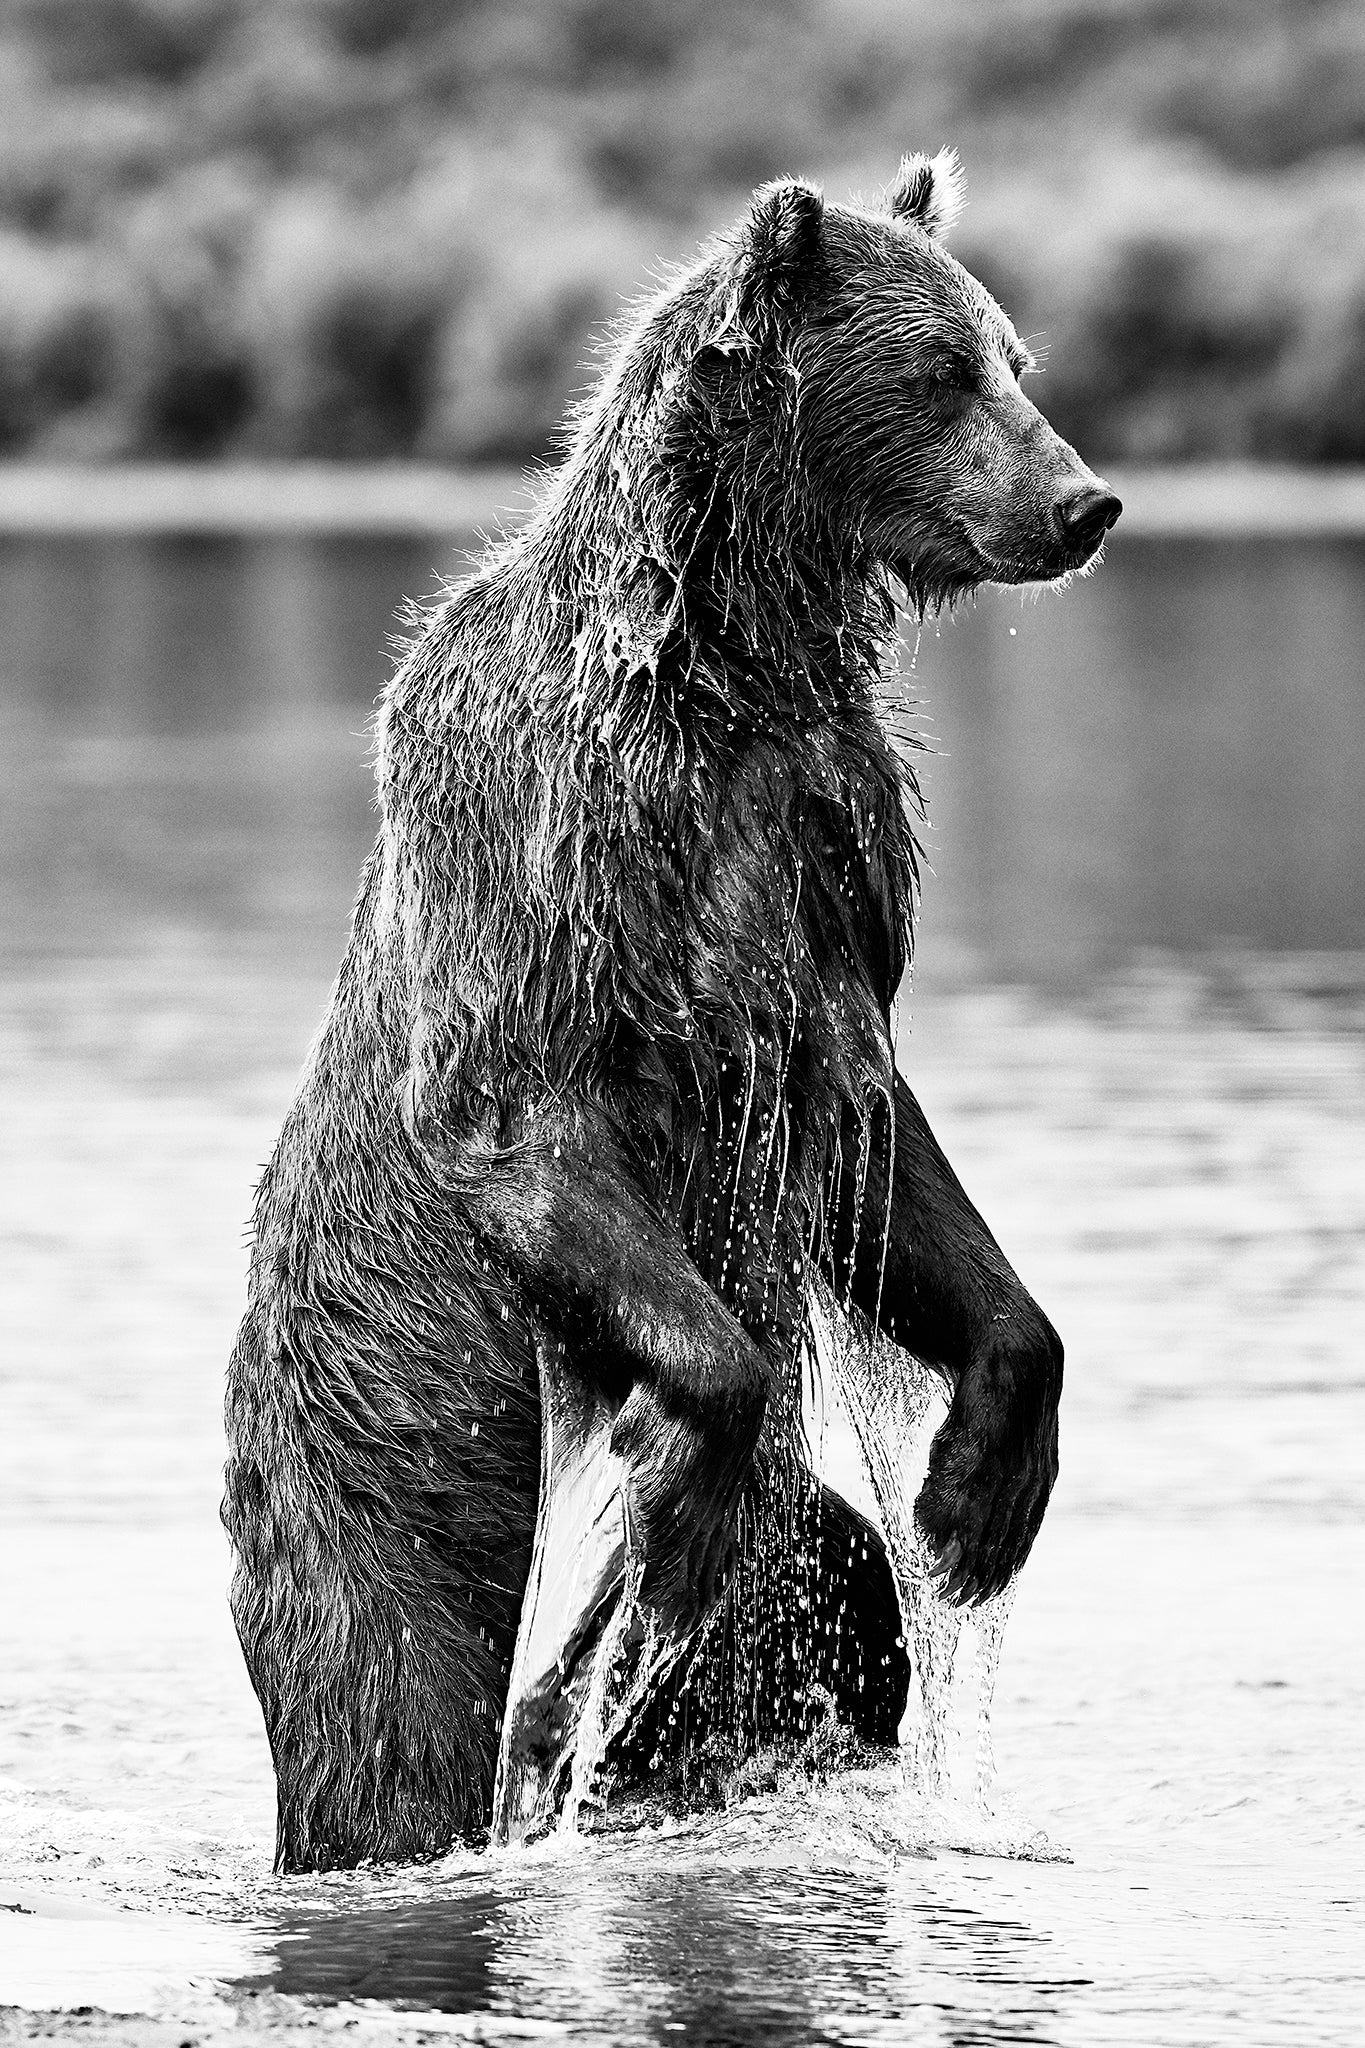 Stand tall - Brown bear, Kamchatka Russia